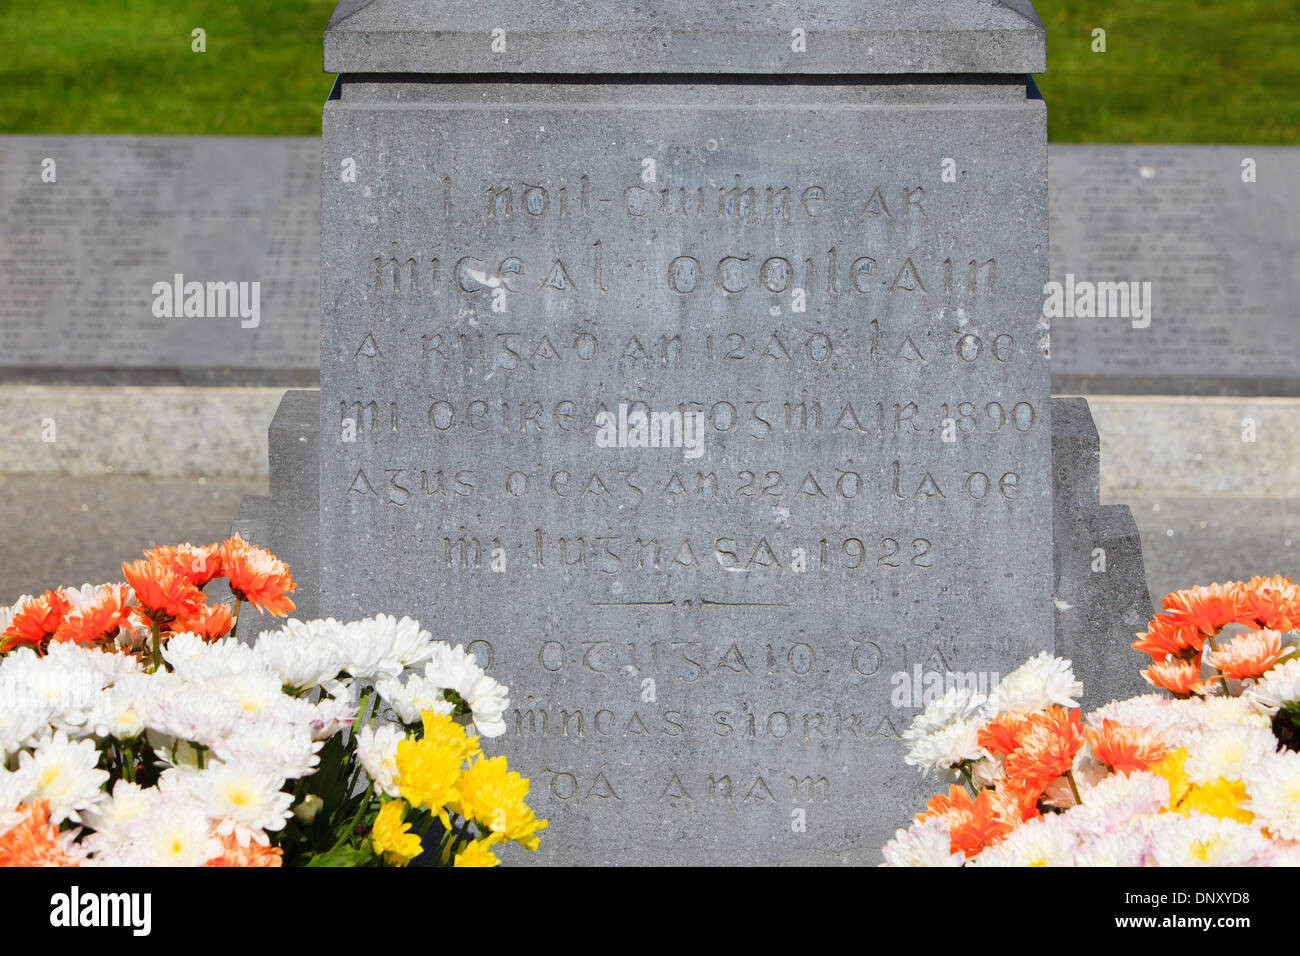 Grave of the Irish revolutionary leader Michael Collins (1890-1922) at Glasnevin Cemetery in Dublin, Ireland Stock Photo